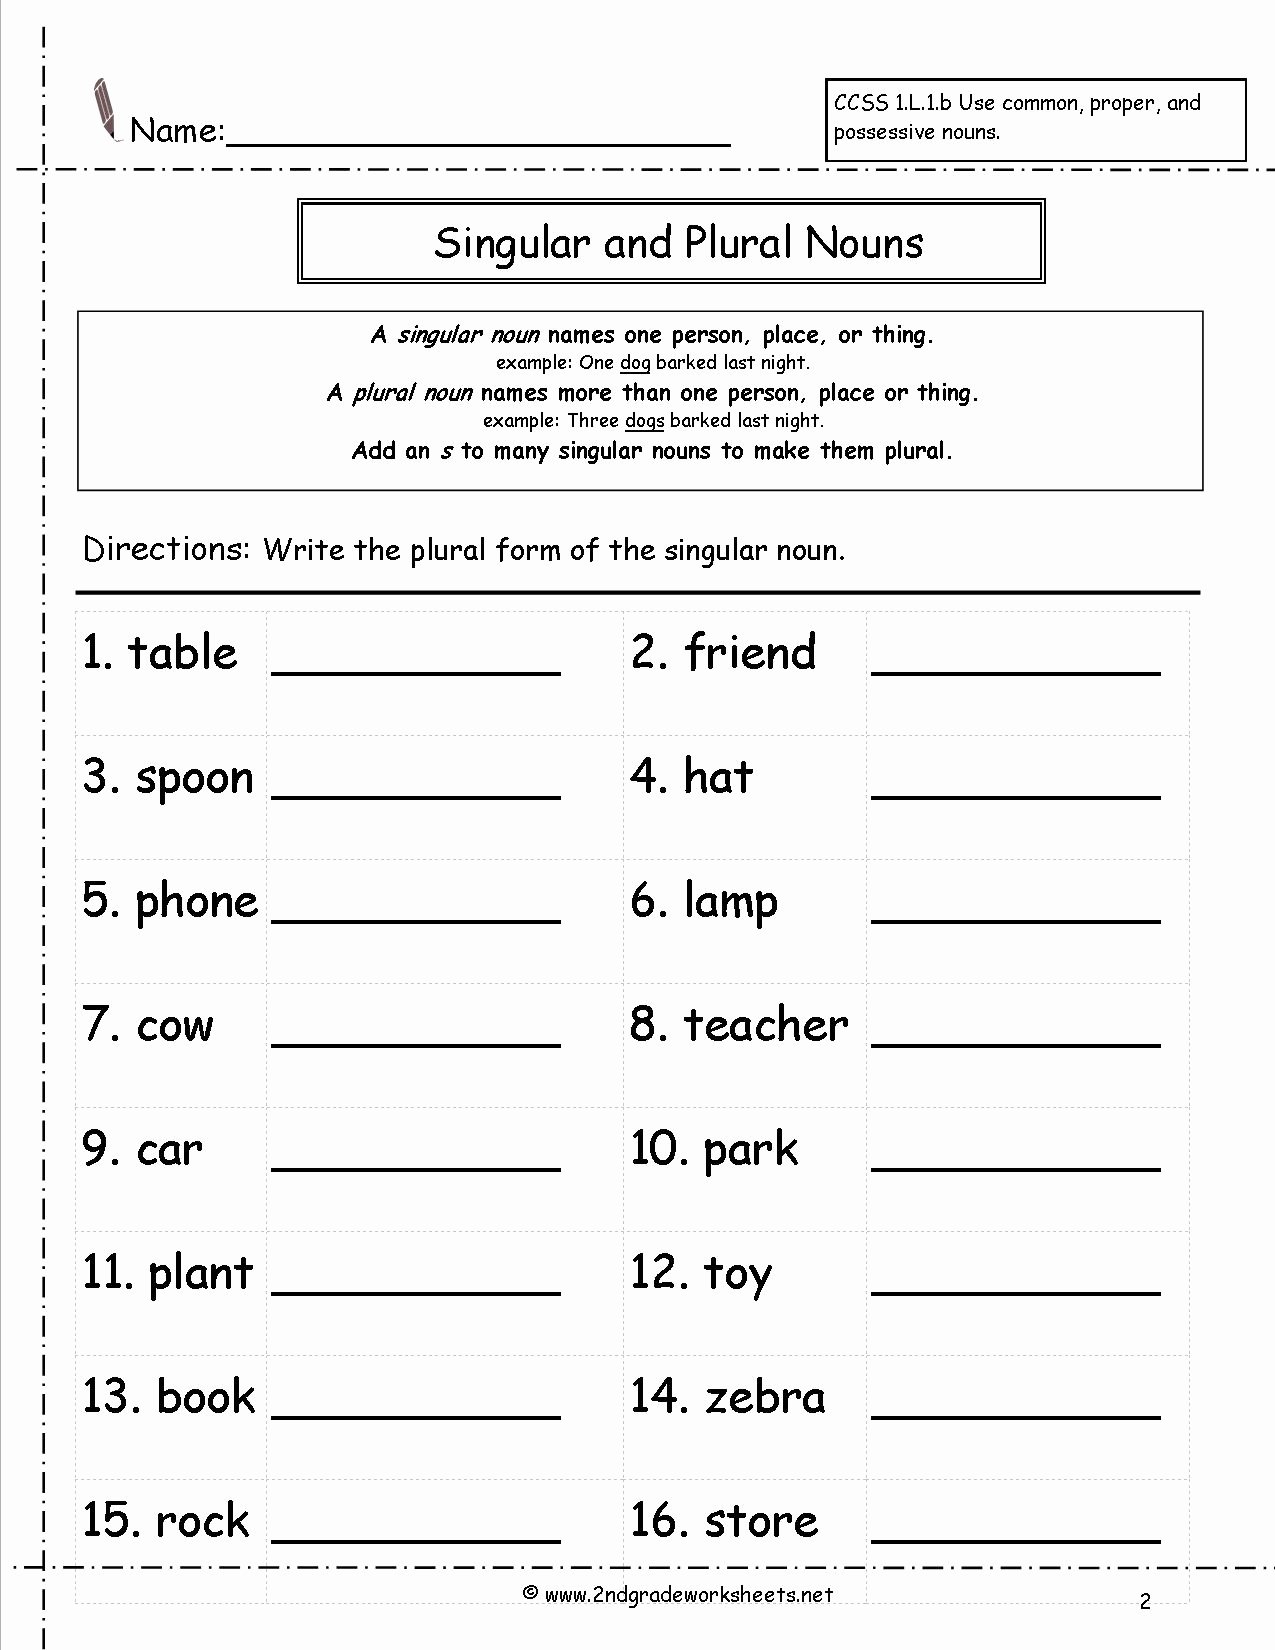 Singular and Plural Nouns Worksheet Elegant Singular and Plural Nouns Worksheets